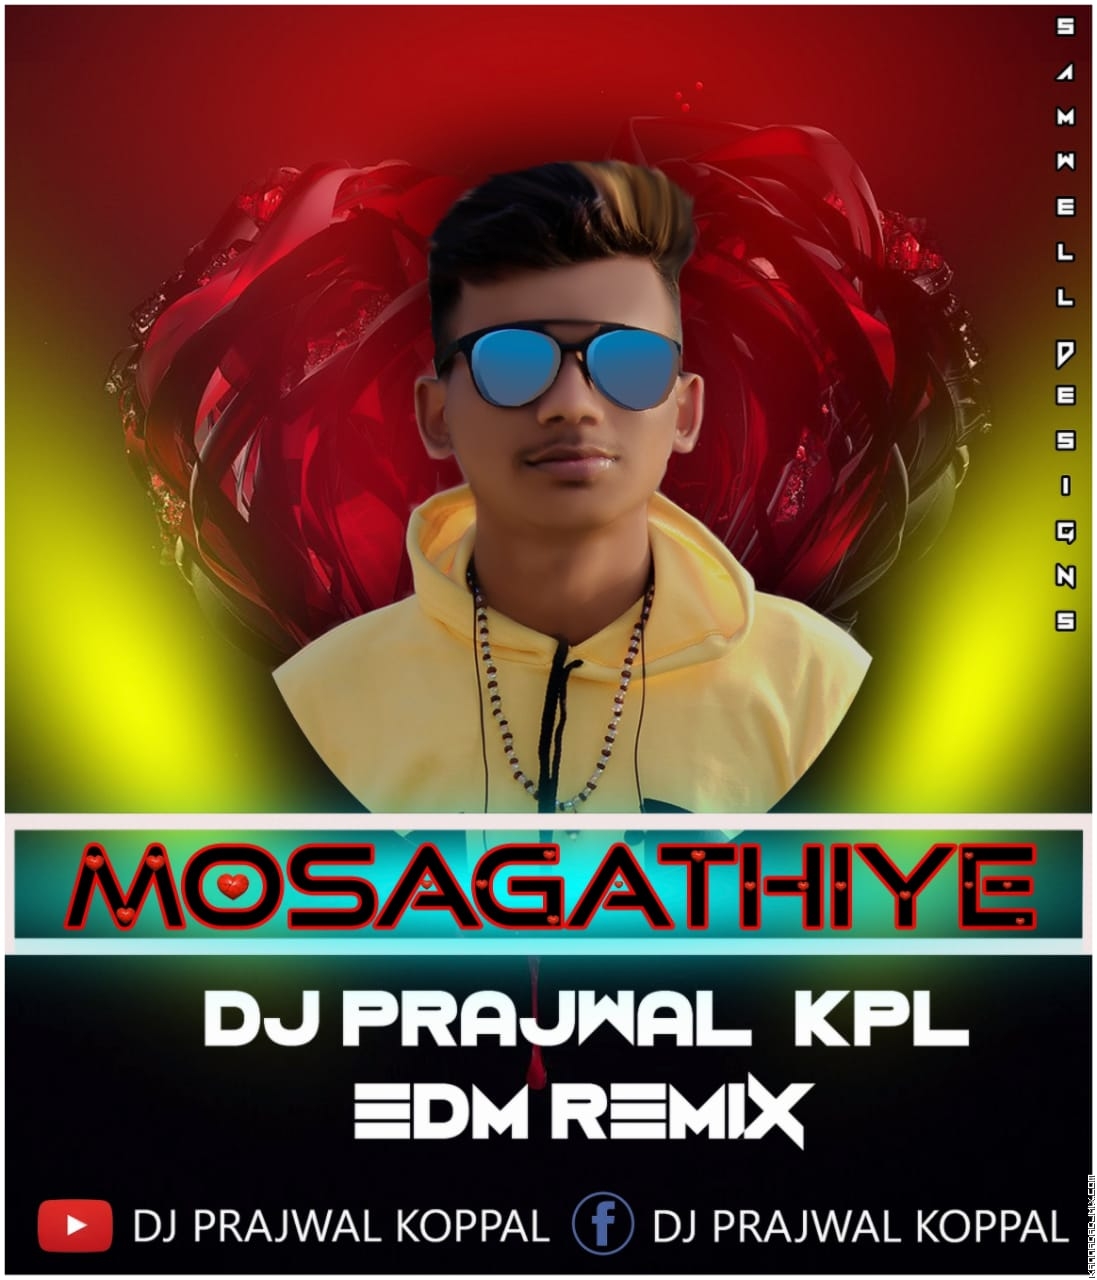 Mosagathiya Edm Drop Mix Dj prajwal kpL.mp3